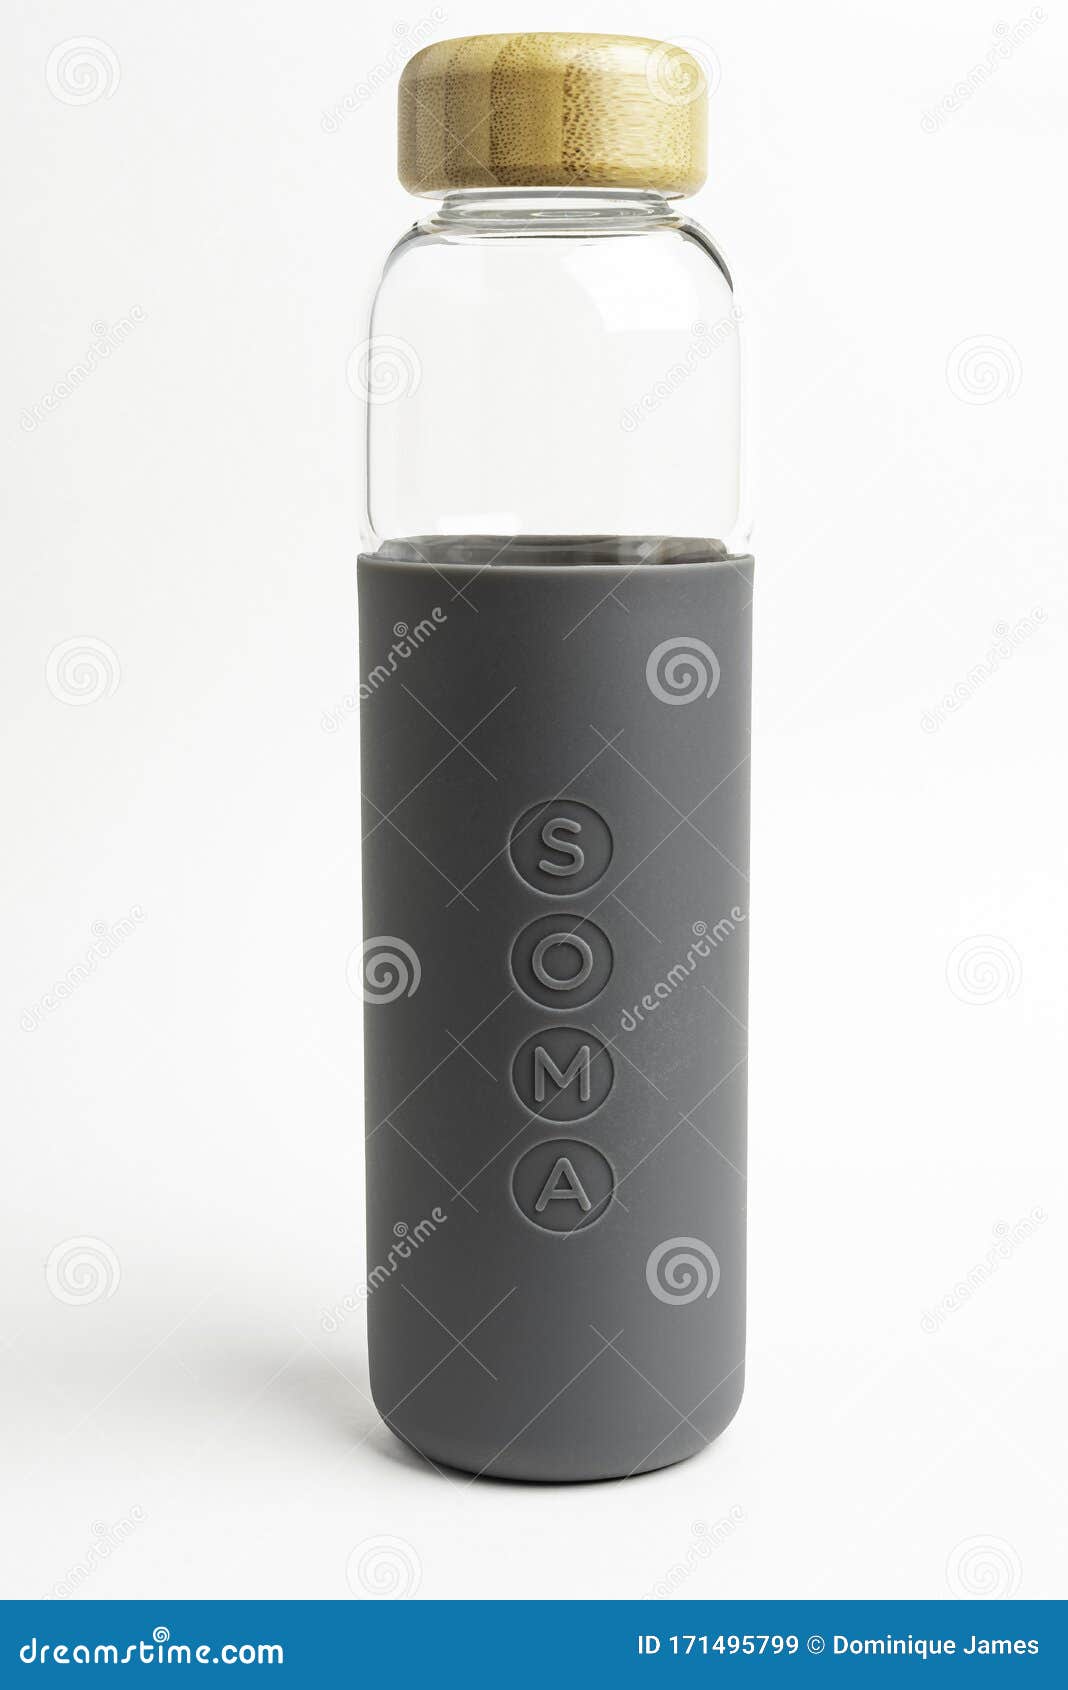 The SOMA Water Bottle, by Bryan Maniotakis, minimalgoods